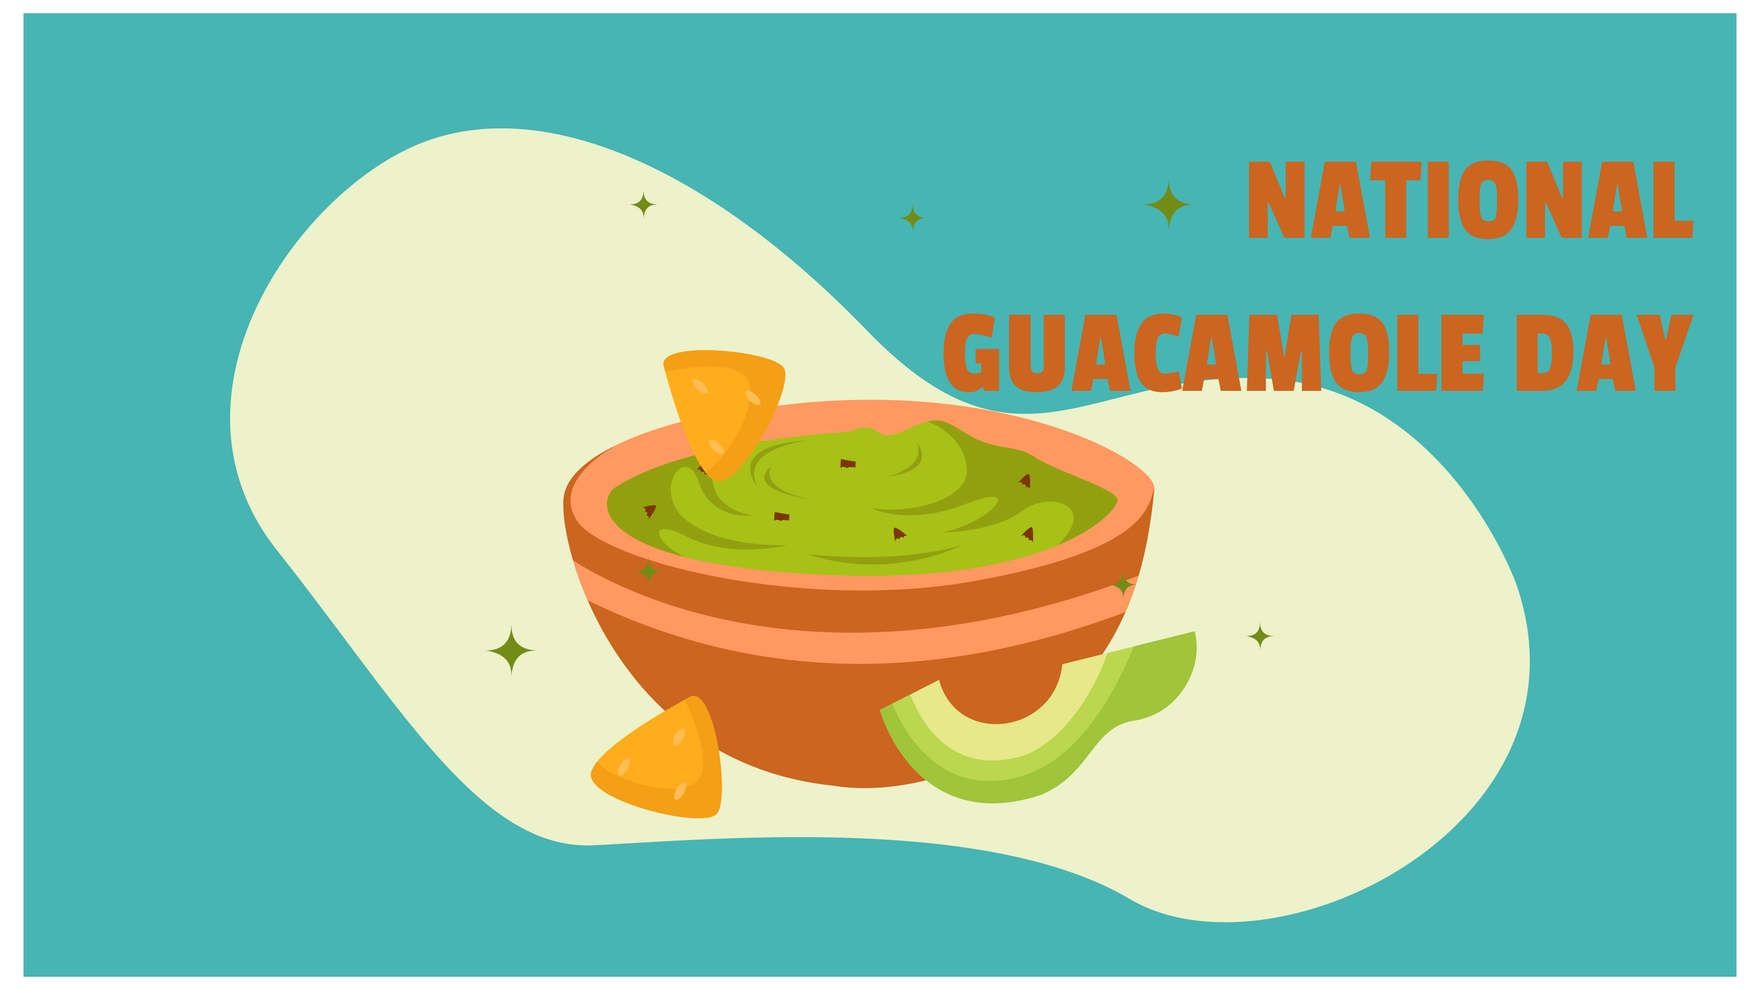 National Guacamole Day Image Background